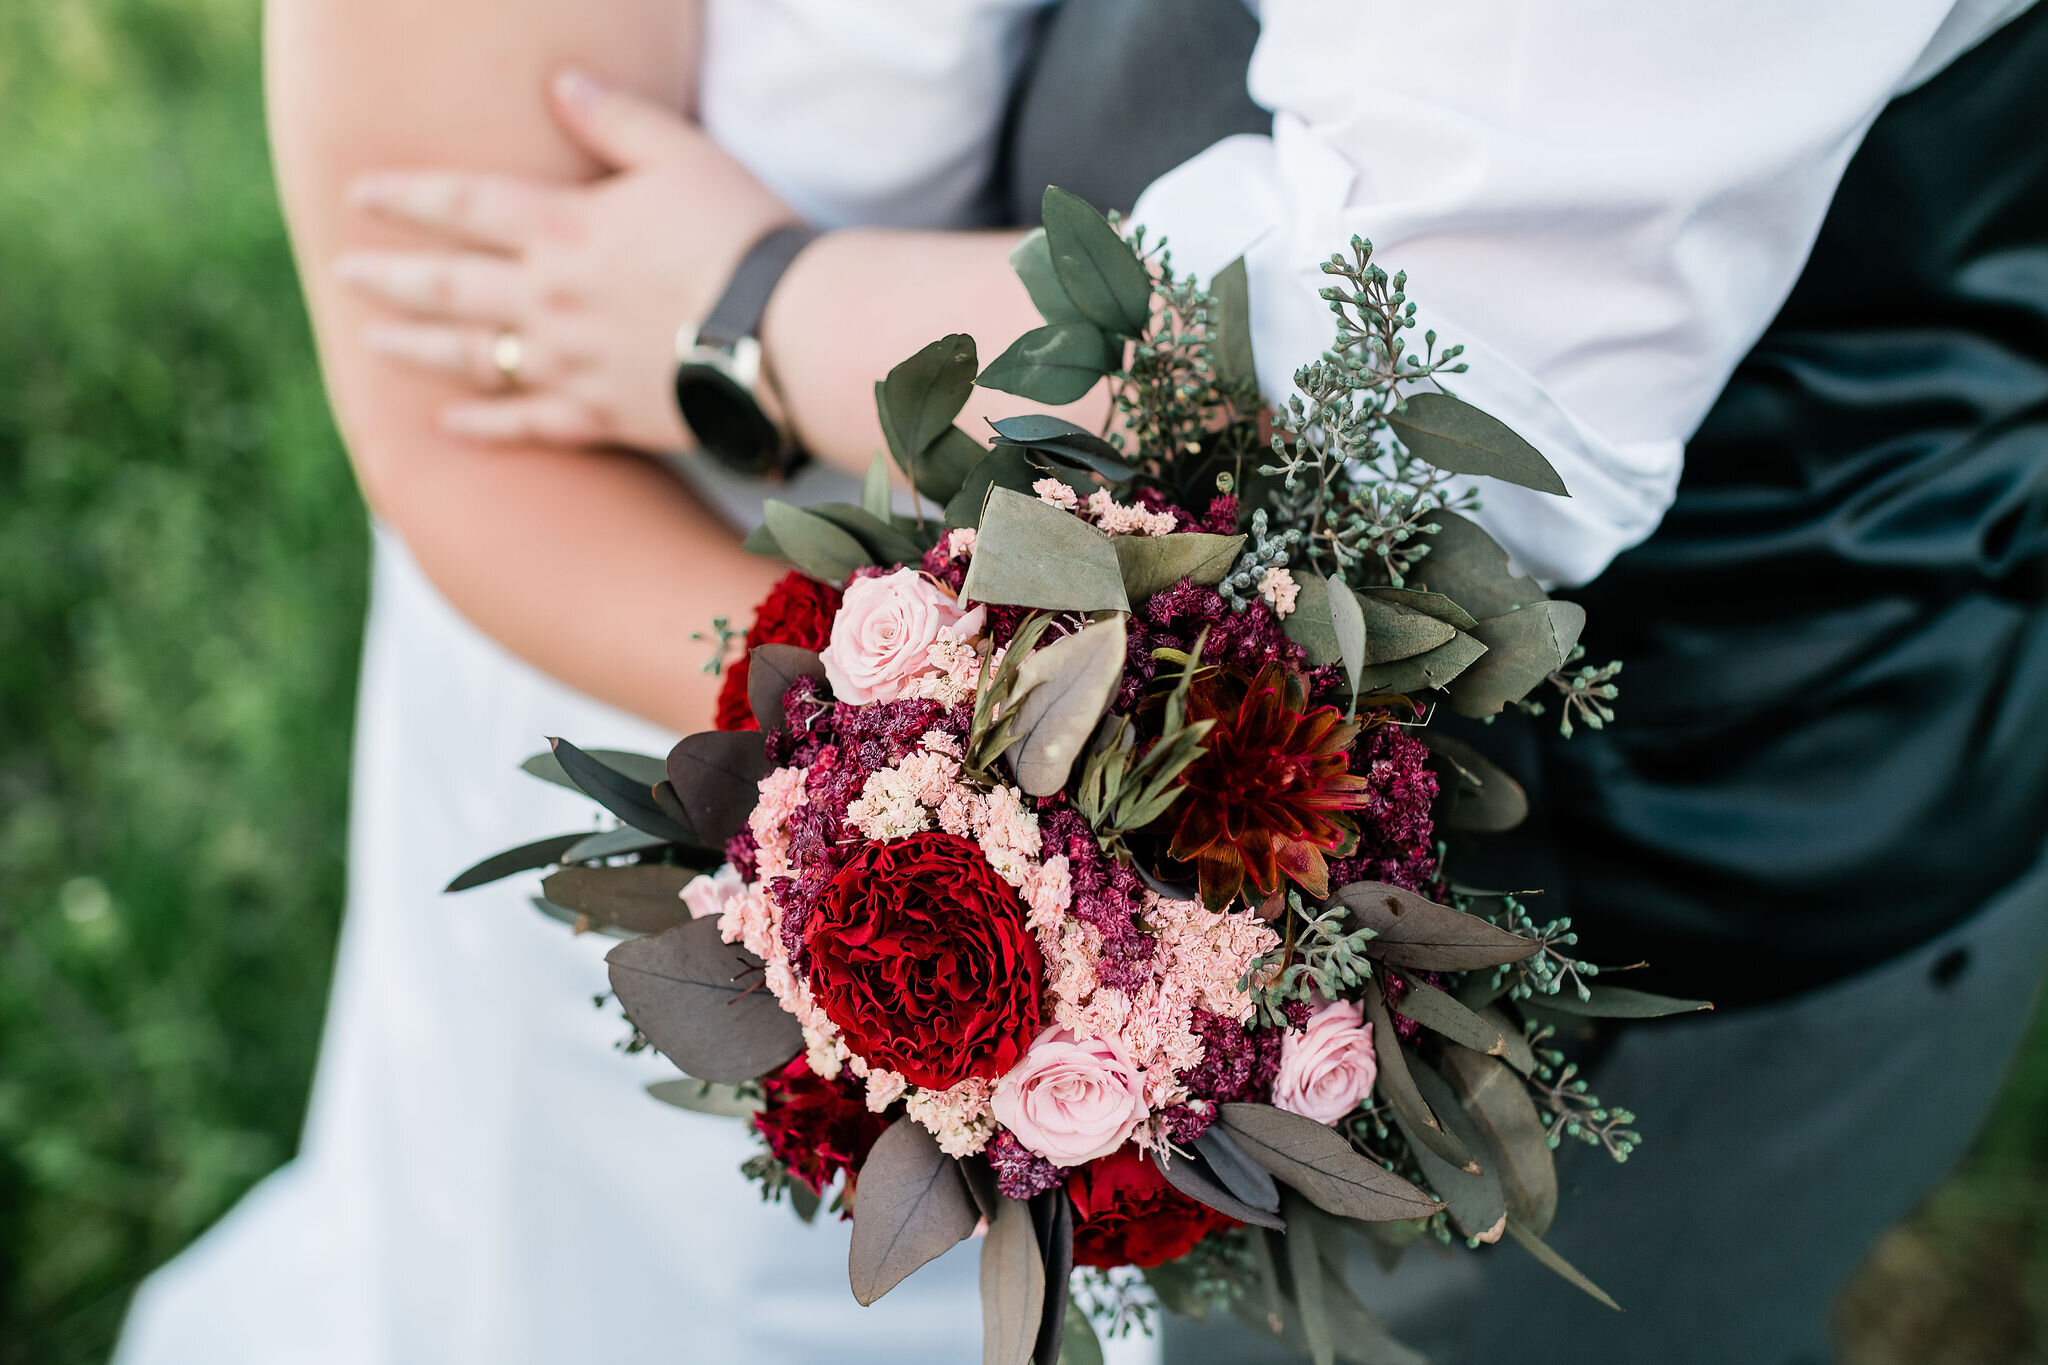 Bride and bride with bouquet